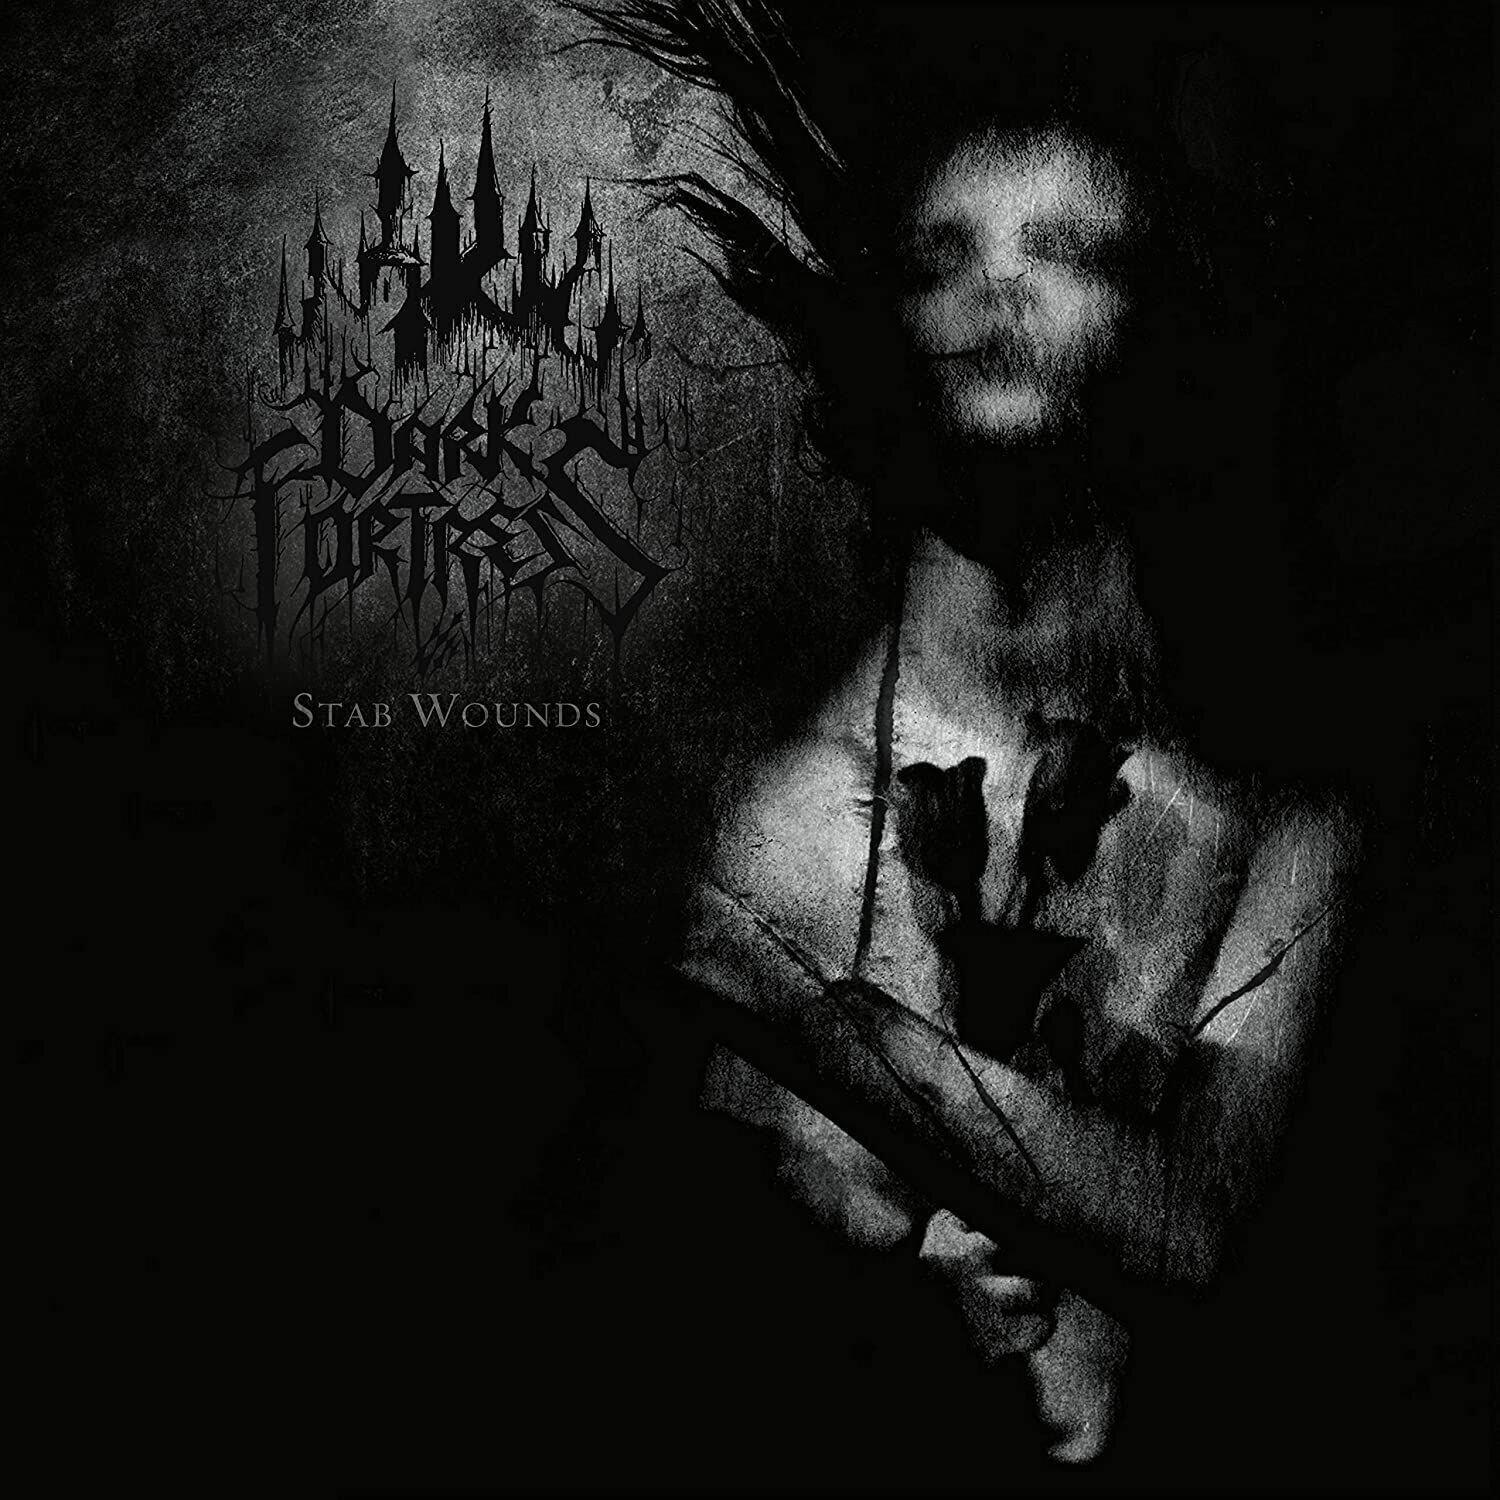 LP Dark Fortress - Stab Wounds (2 LP)